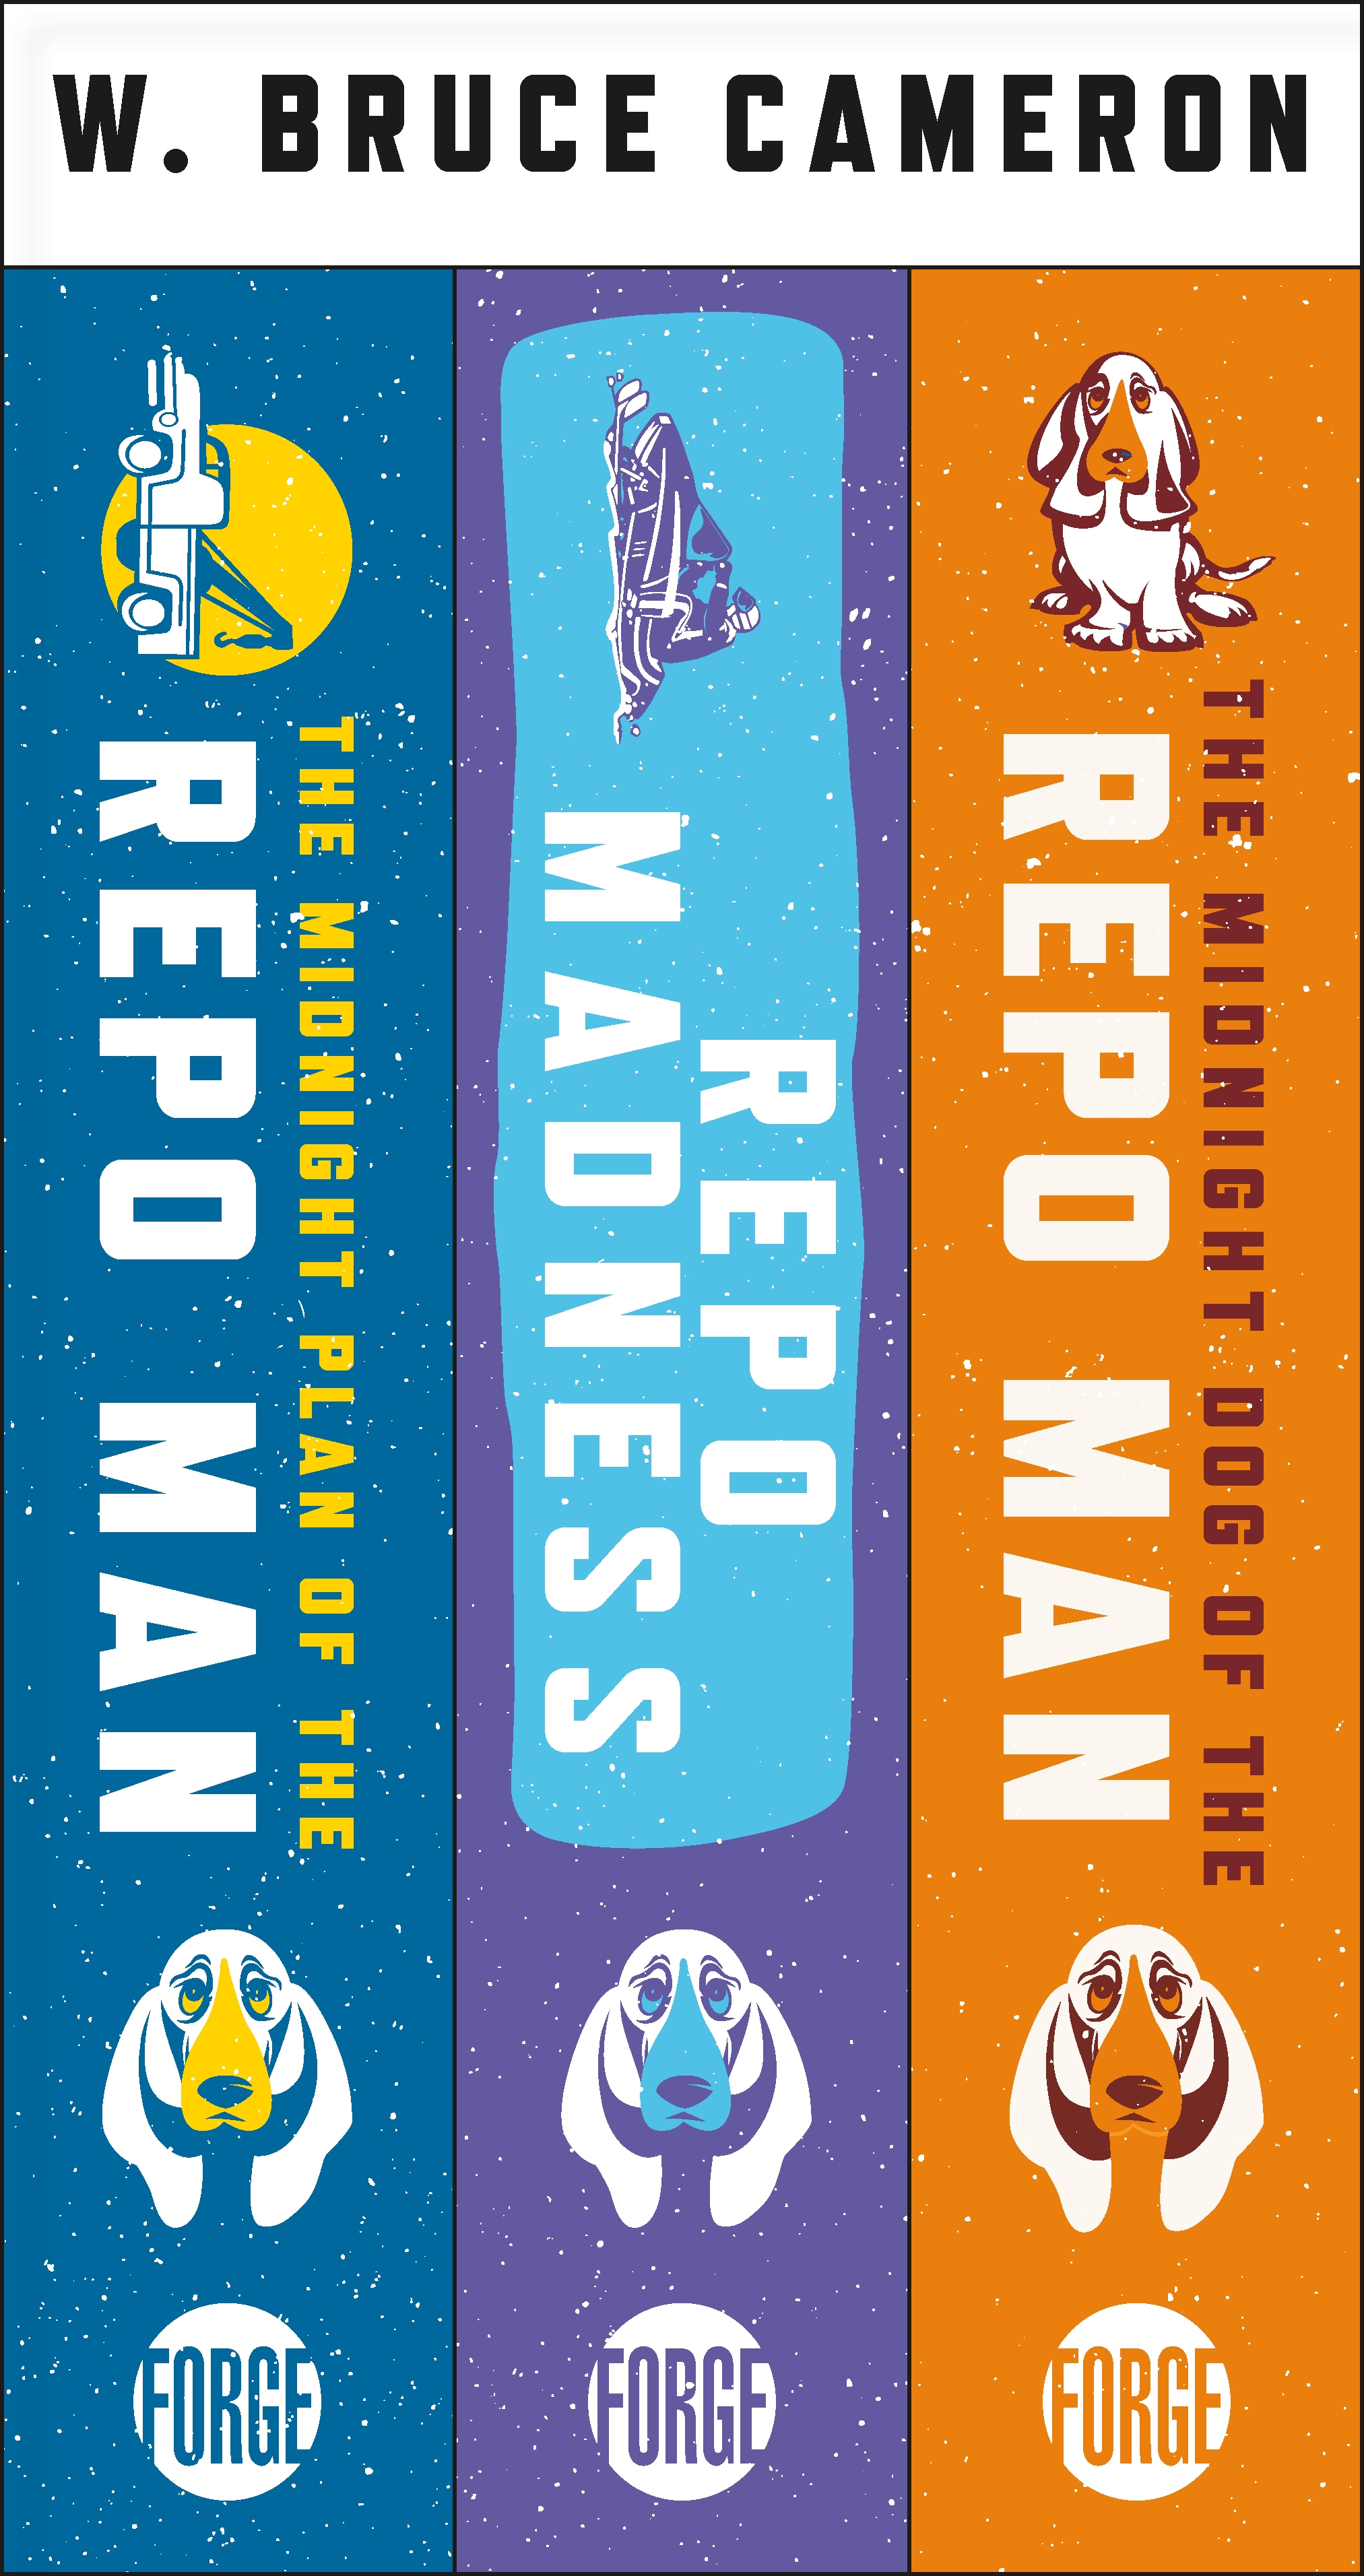 The Ruddy McCann Series : The Midnight Plan of the Repo Man, Repo Madness, The Midnight Dog of the Repo Man by W. Bruce Cameron